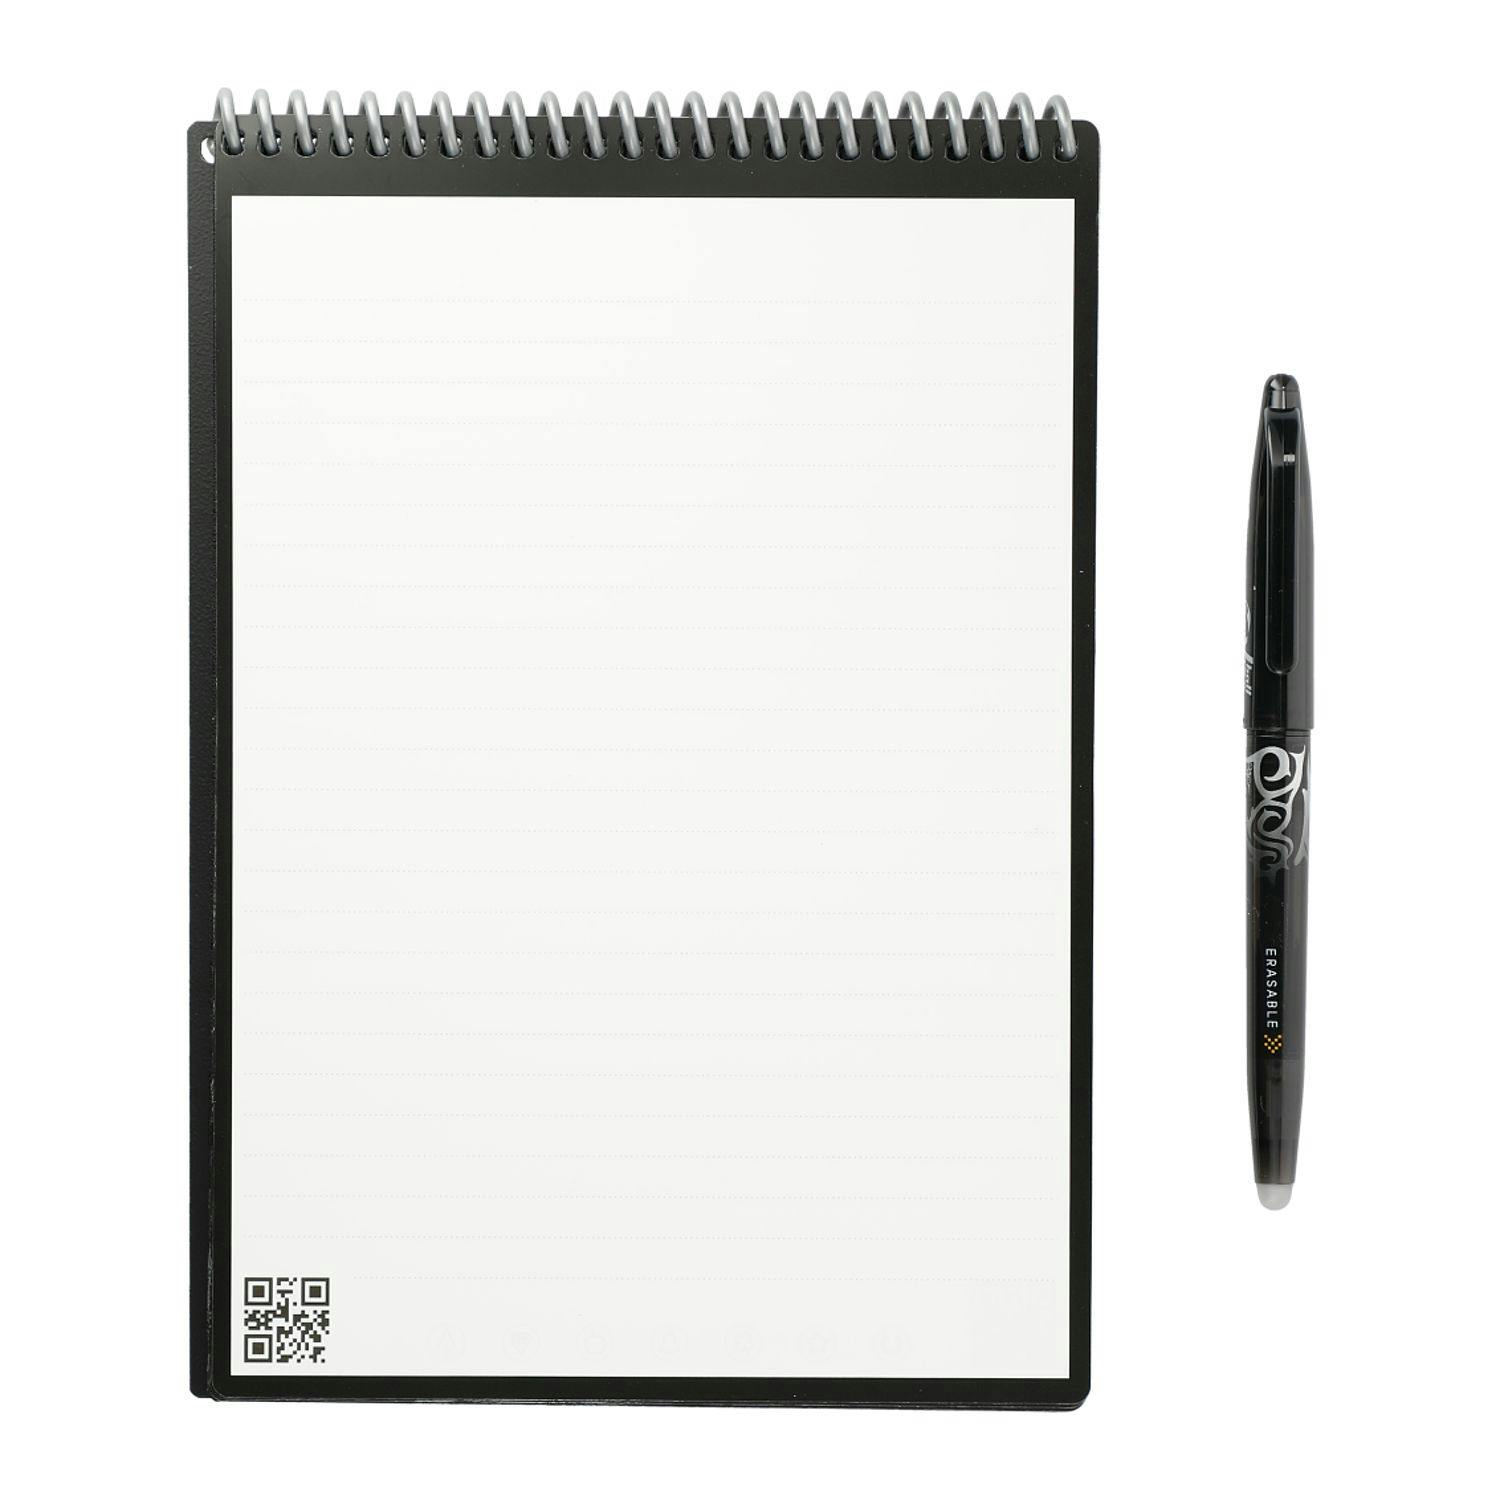 Rocketbook Executive Flip Notebook Set - additional Image 1